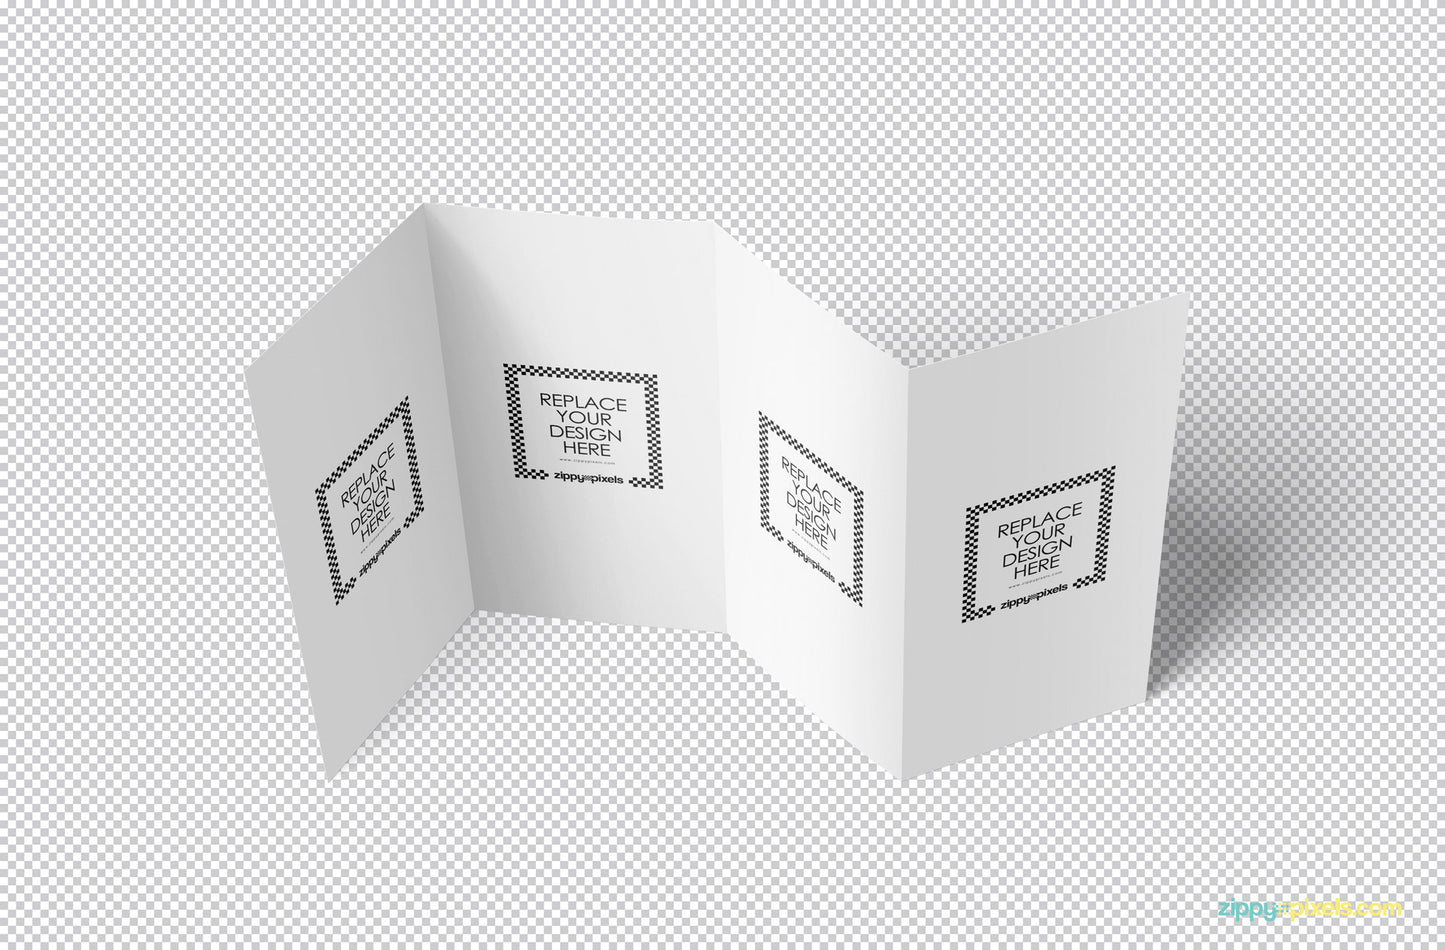 Free Photo-realistic Folded Brochure Mockup